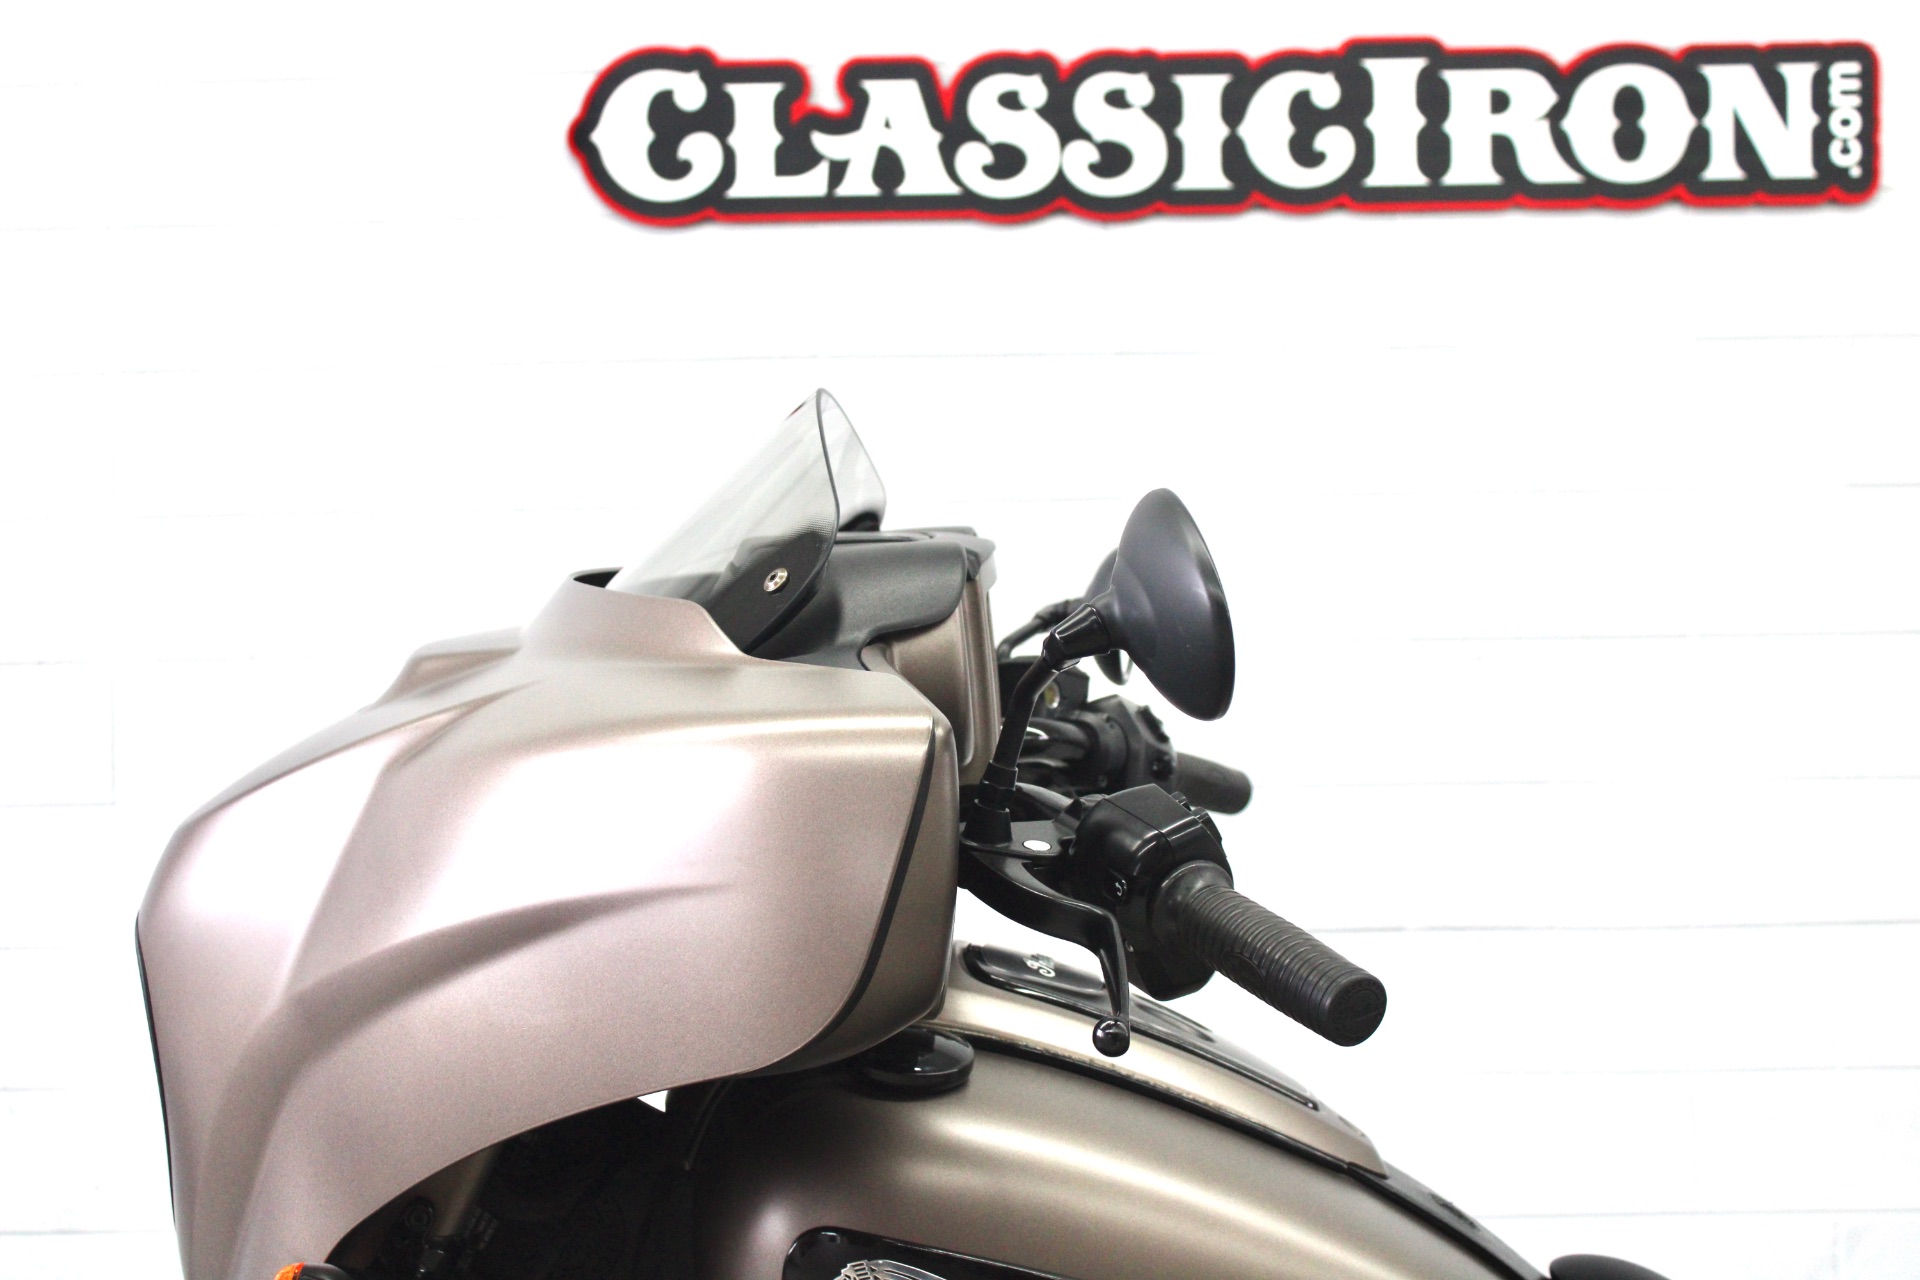 2019 Indian Motorcycle Chieftain® Dark Horse® ABS in Fredericksburg, Virginia - Photo 17